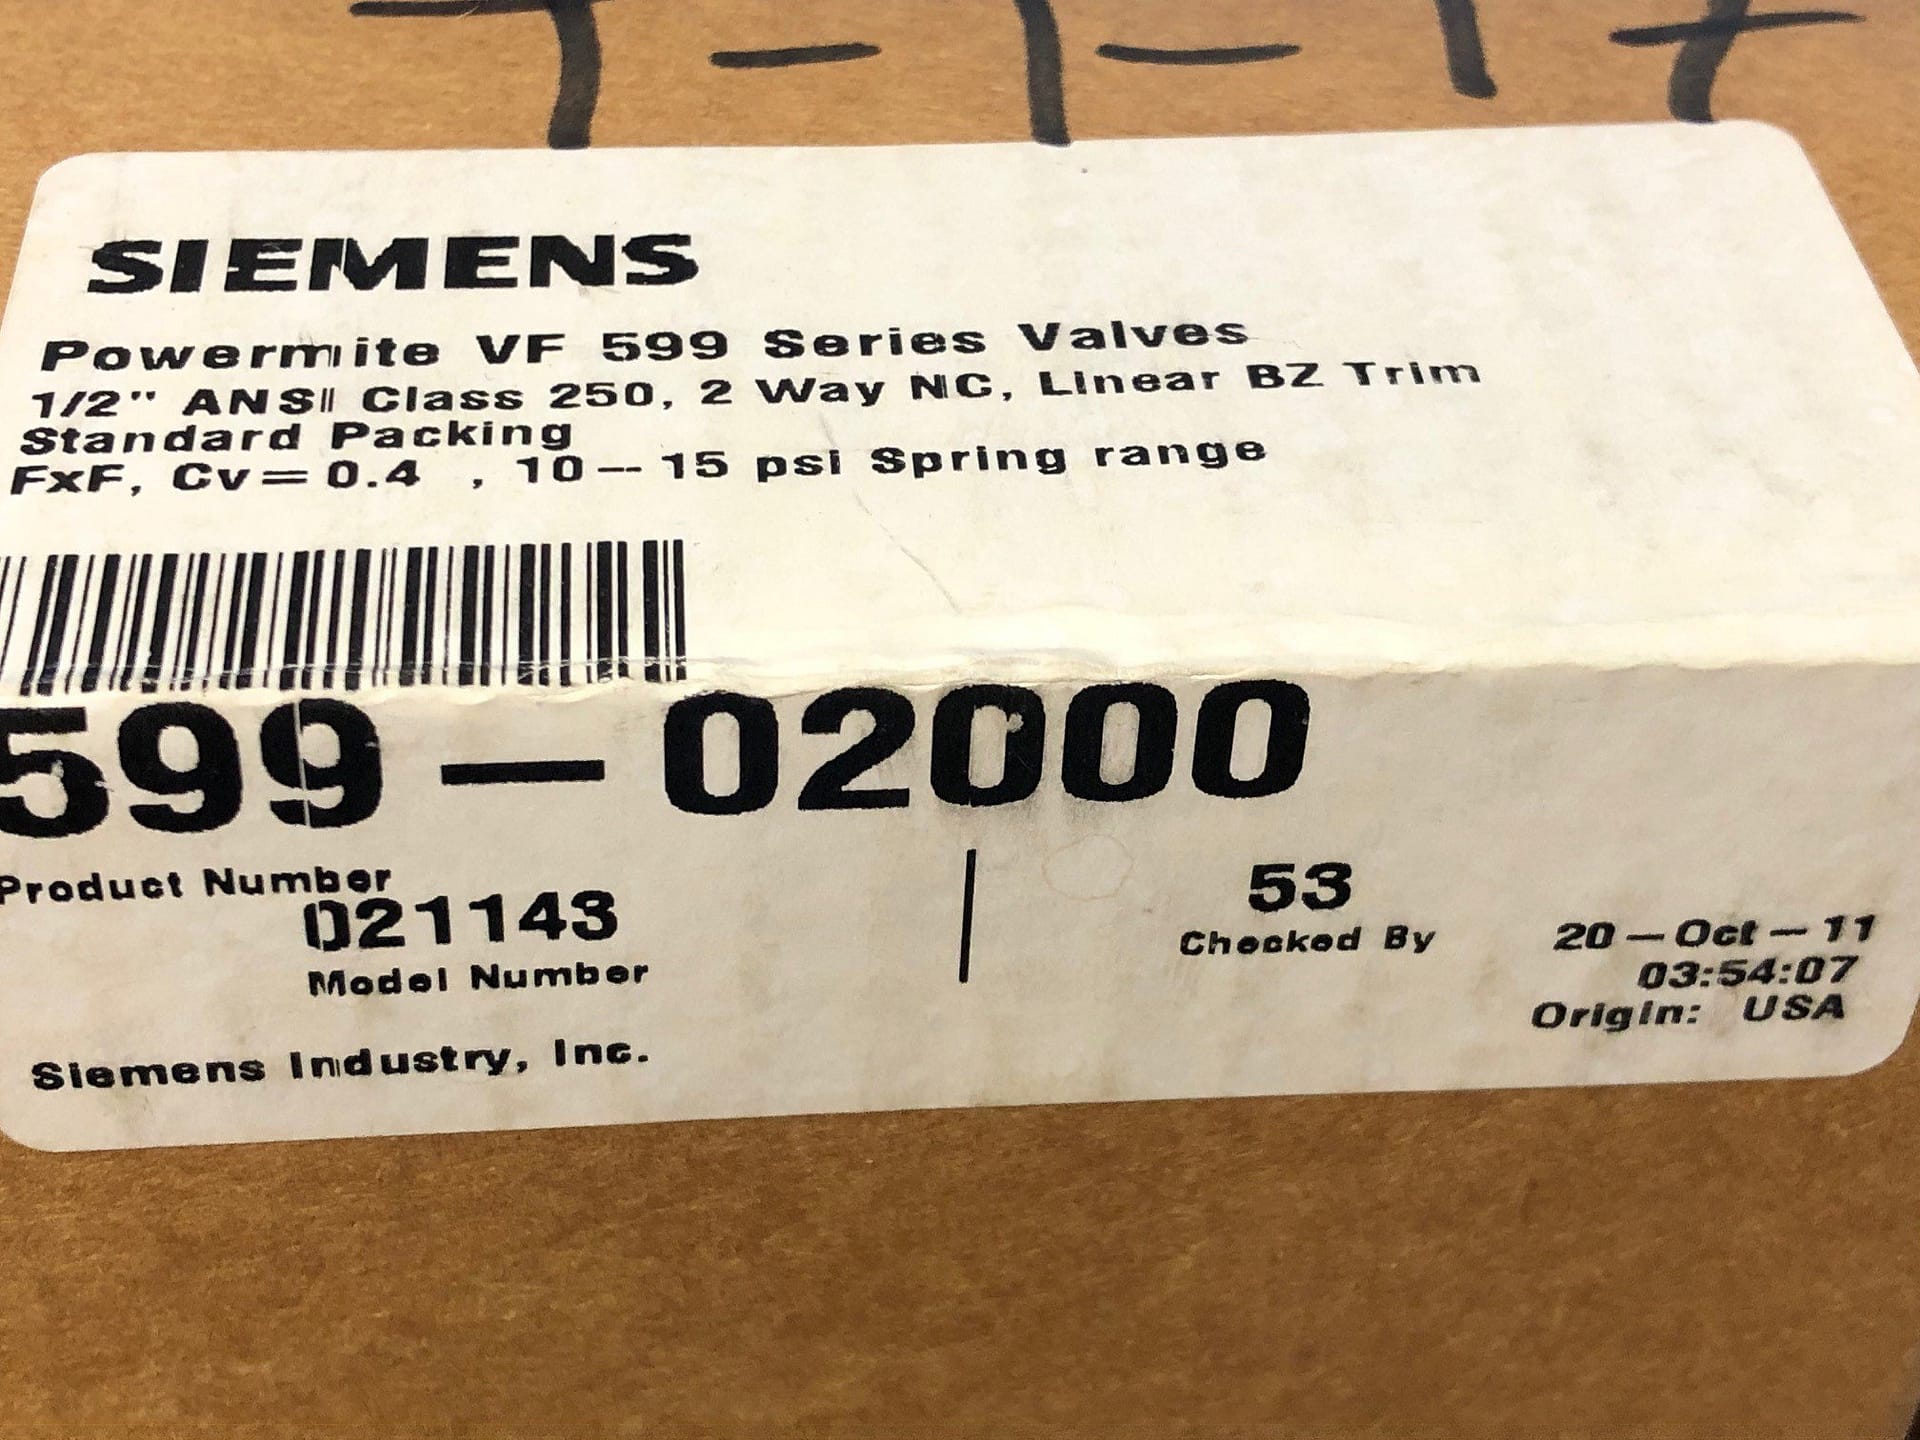 Siemens 599-02000